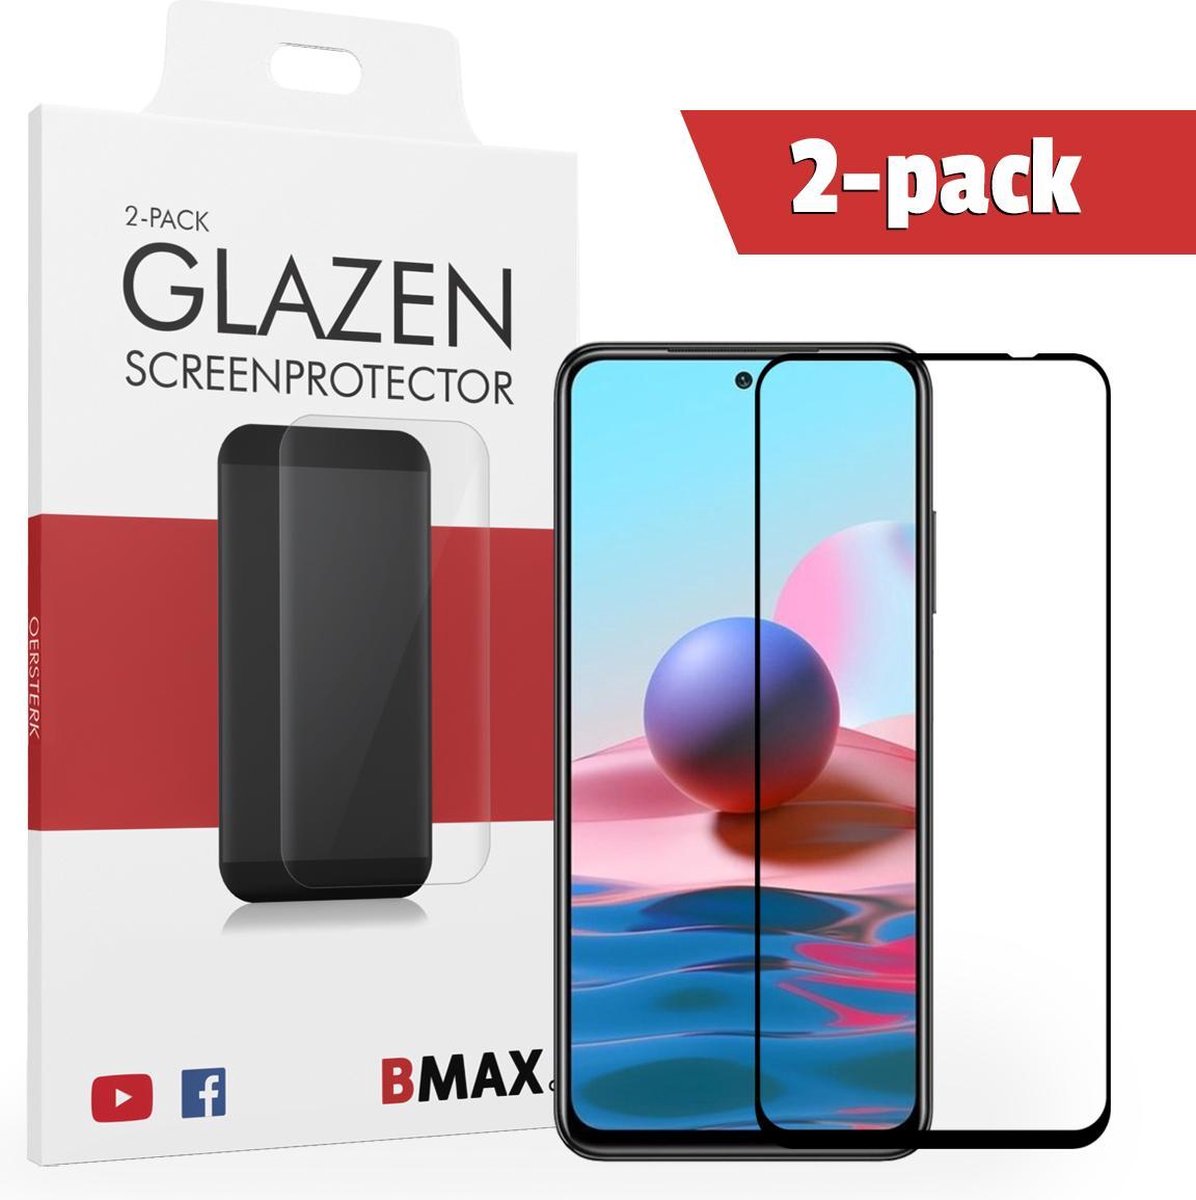 2-pack Bmax Xiaomi Redmi Note 10 Screenprotector - Glass - Full Cover 2.5d - Black